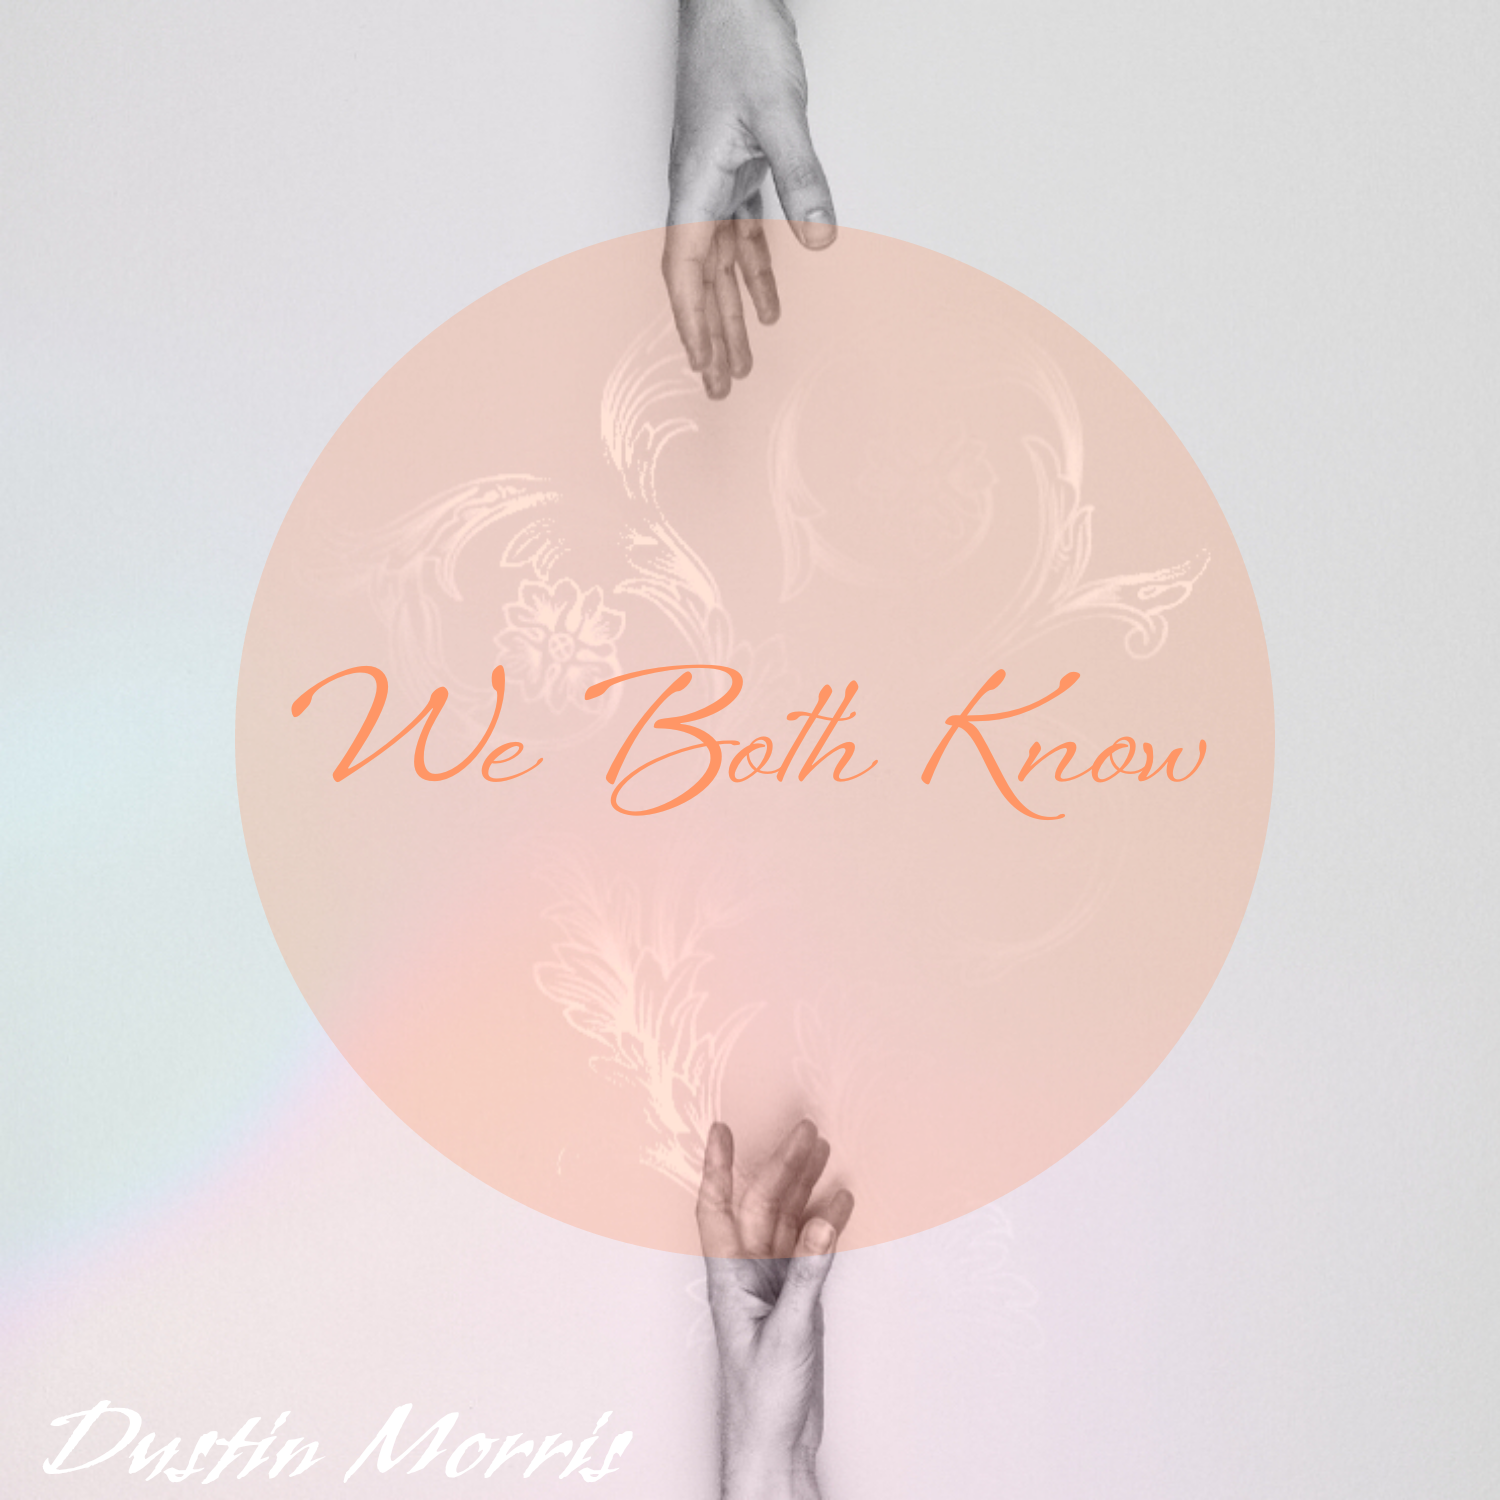 Dustin Morris - We Both Know